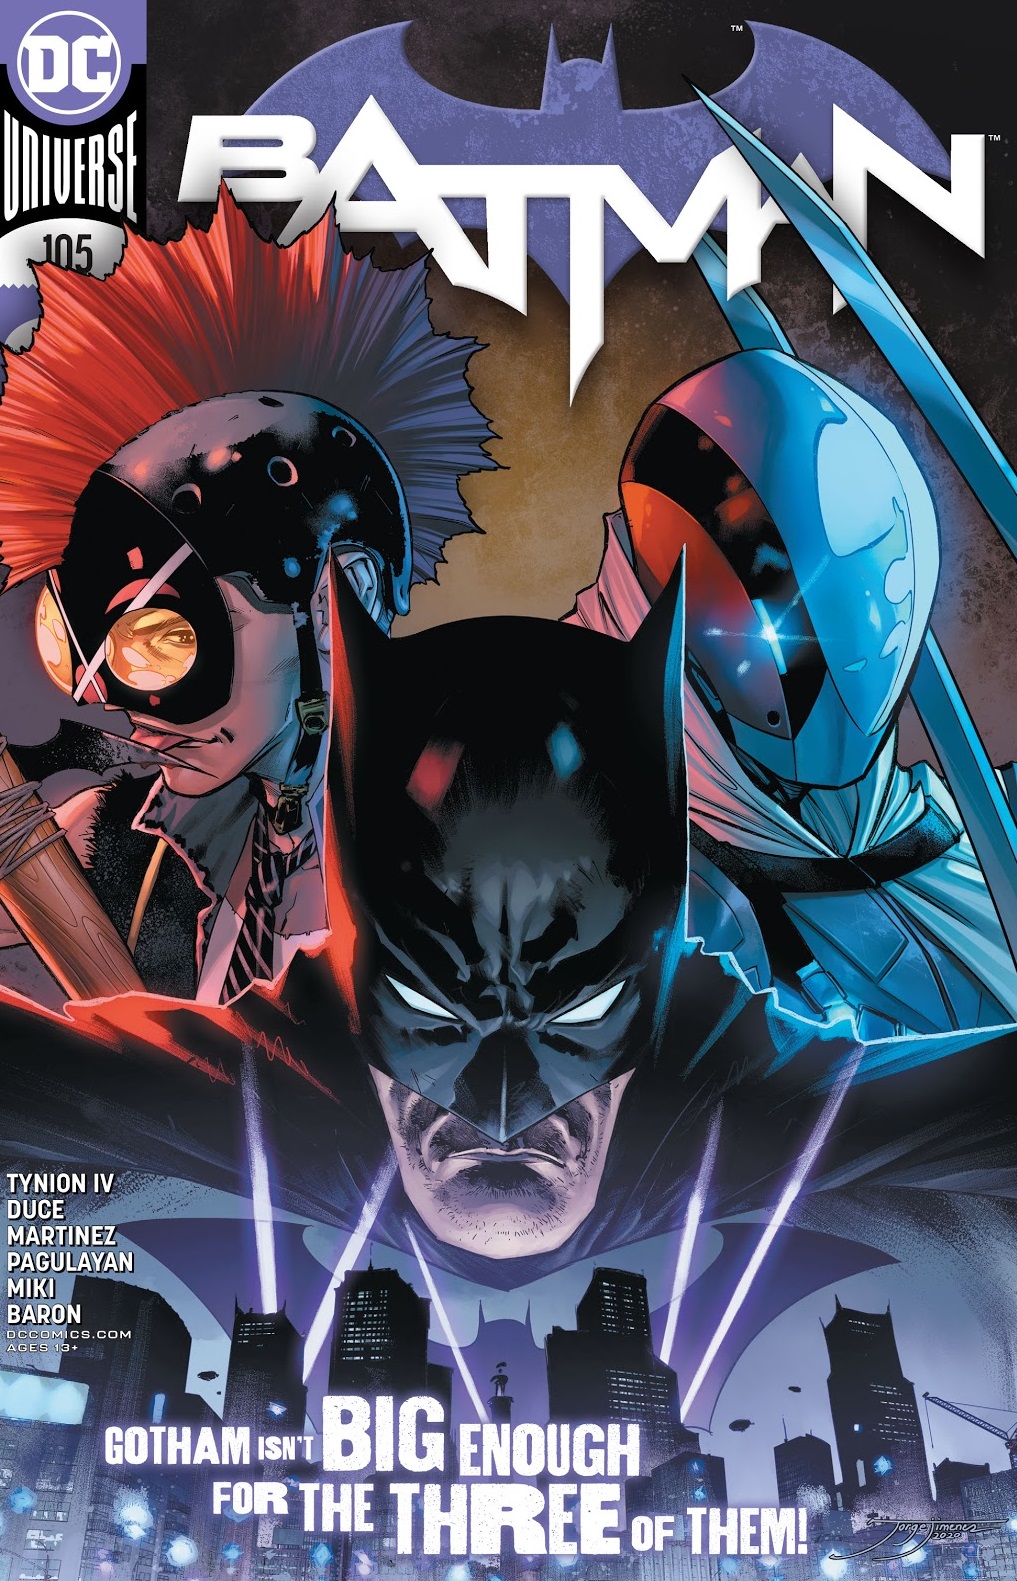 Batman Issue 105 review